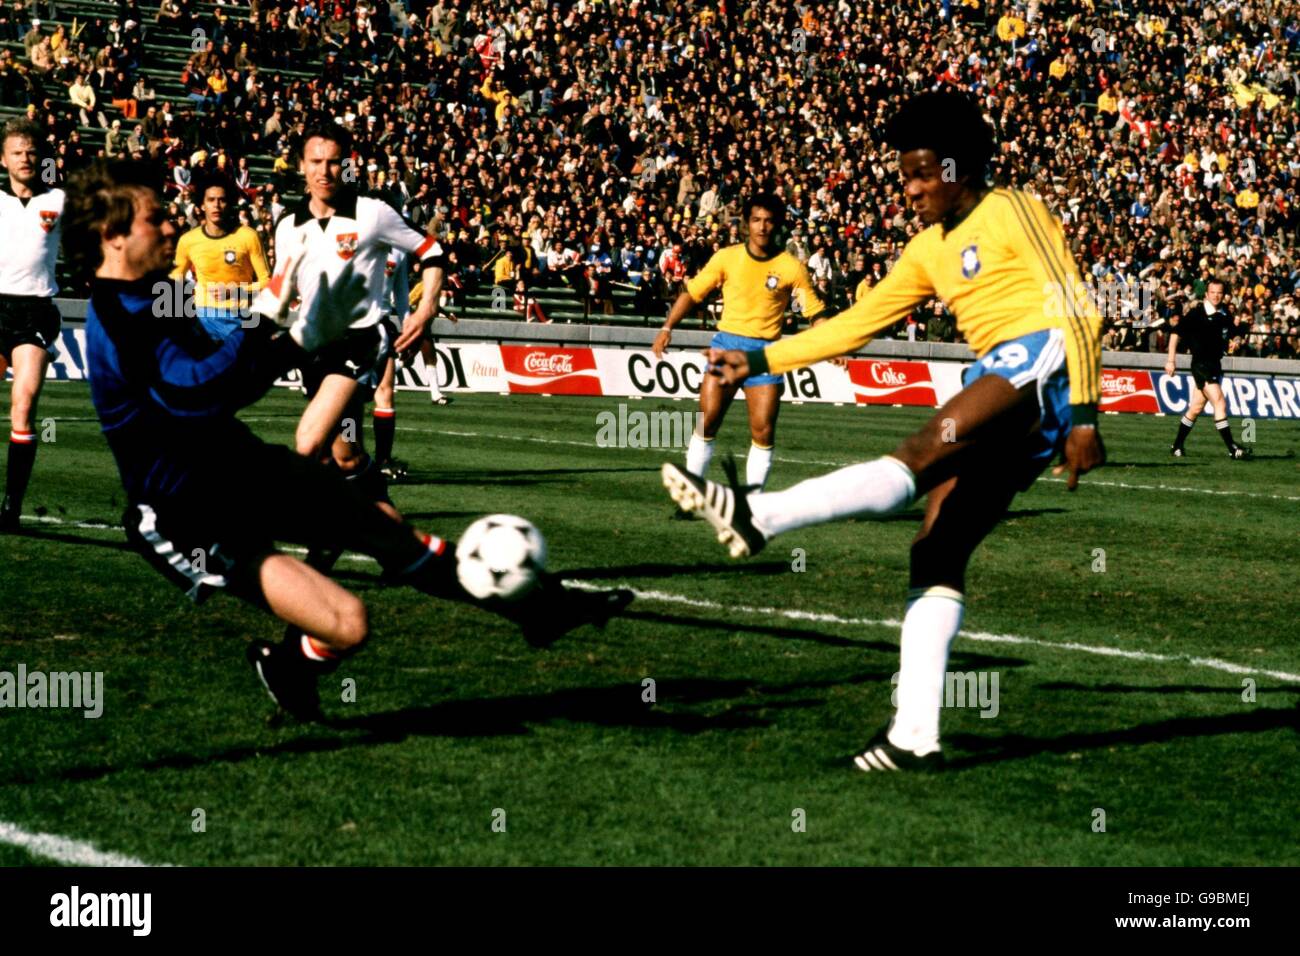 soccer-world-cup-argentina-1978-group-3-austria-v-brazil-g9bmej.jpg